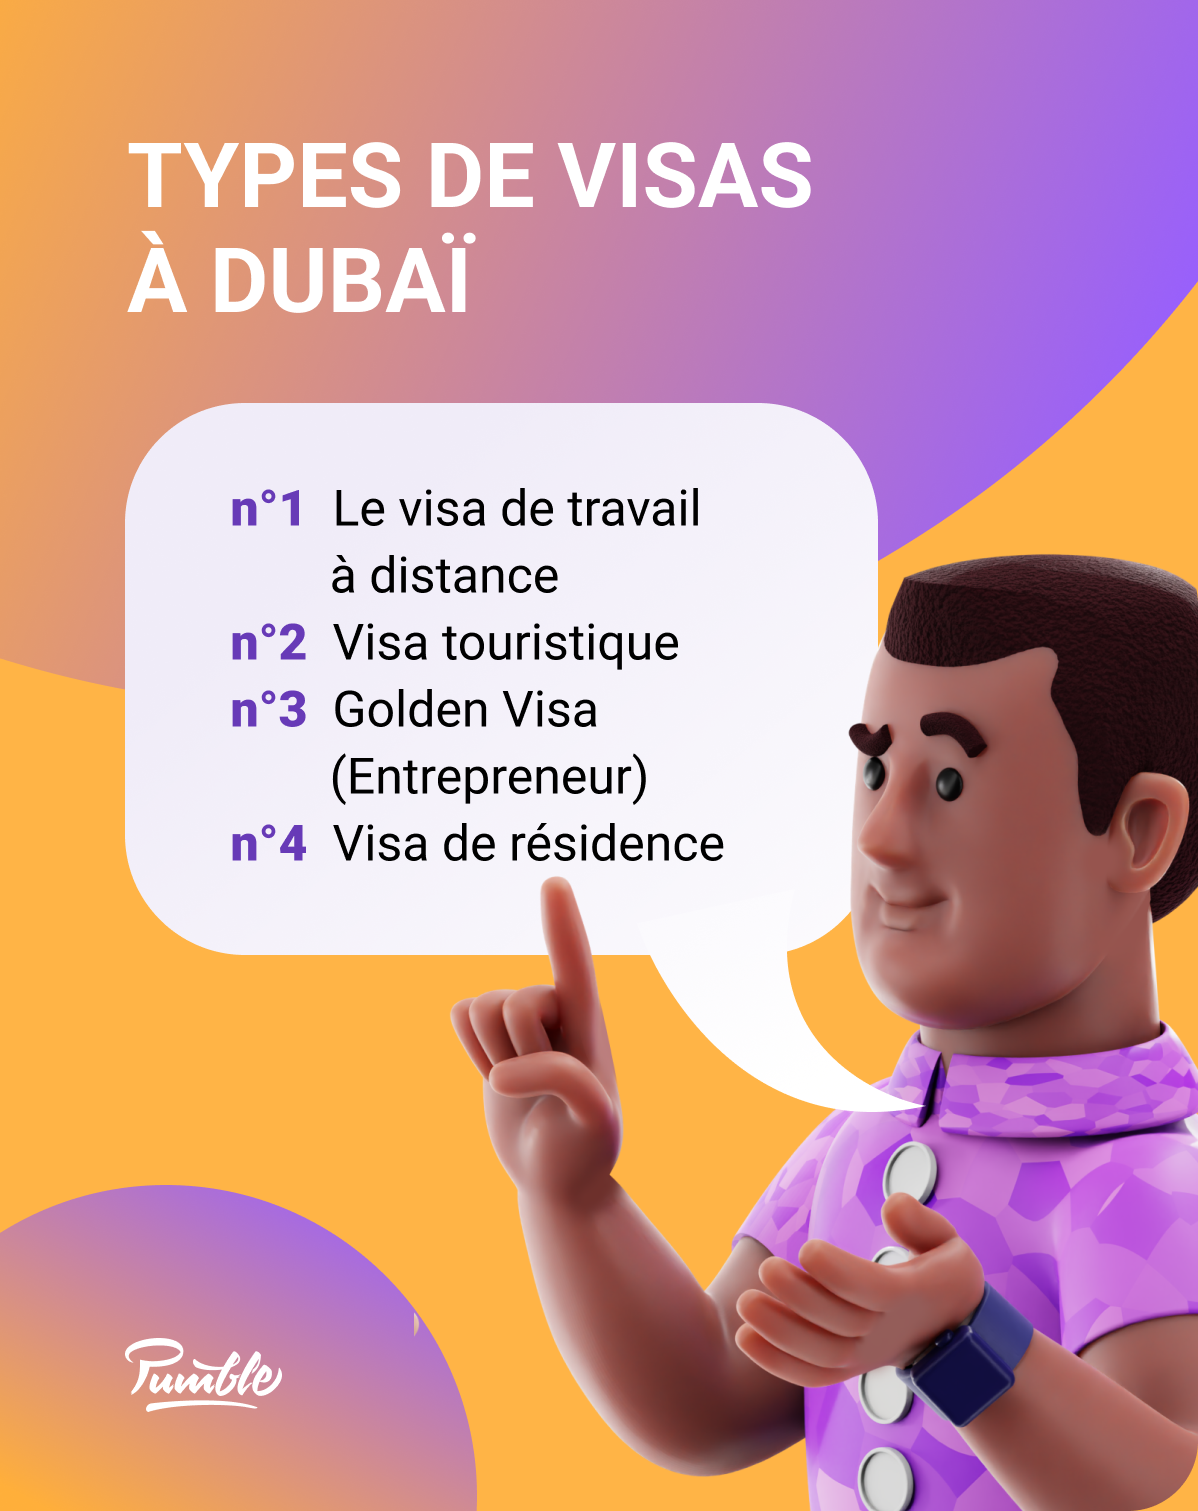 Types of visas for digital nomads in Dubai